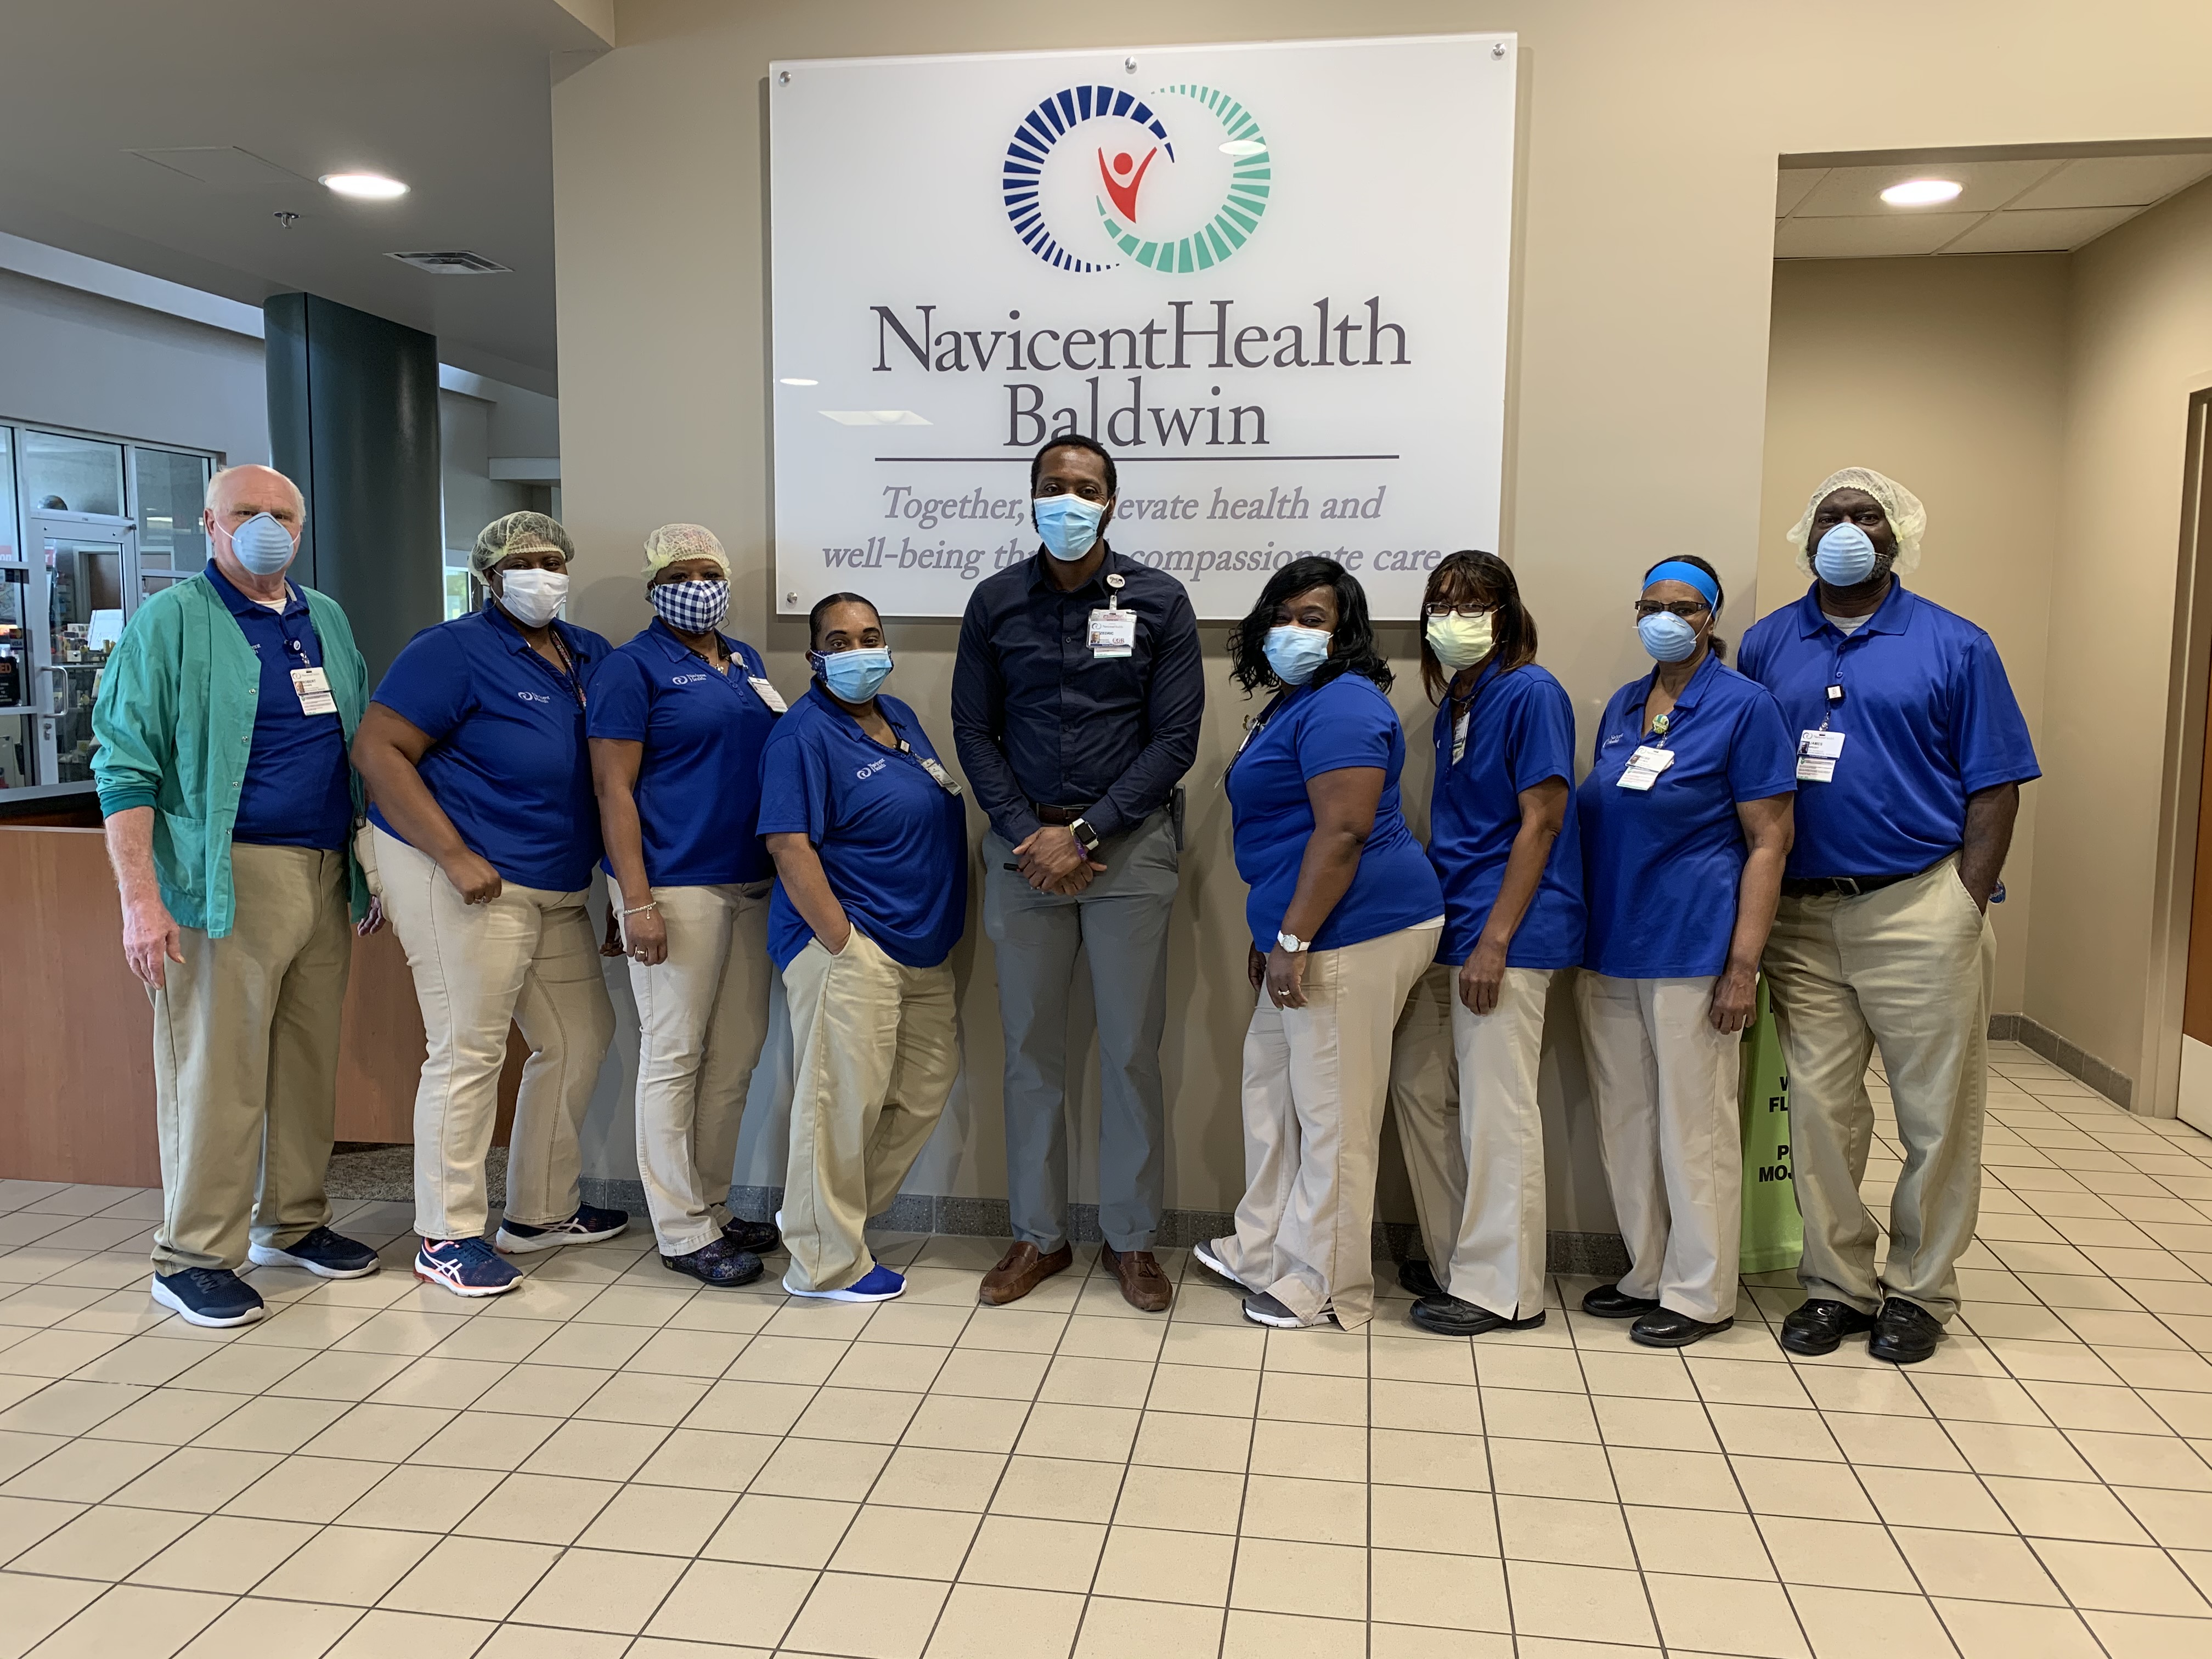 Navicent Health Baldwin staff standing together